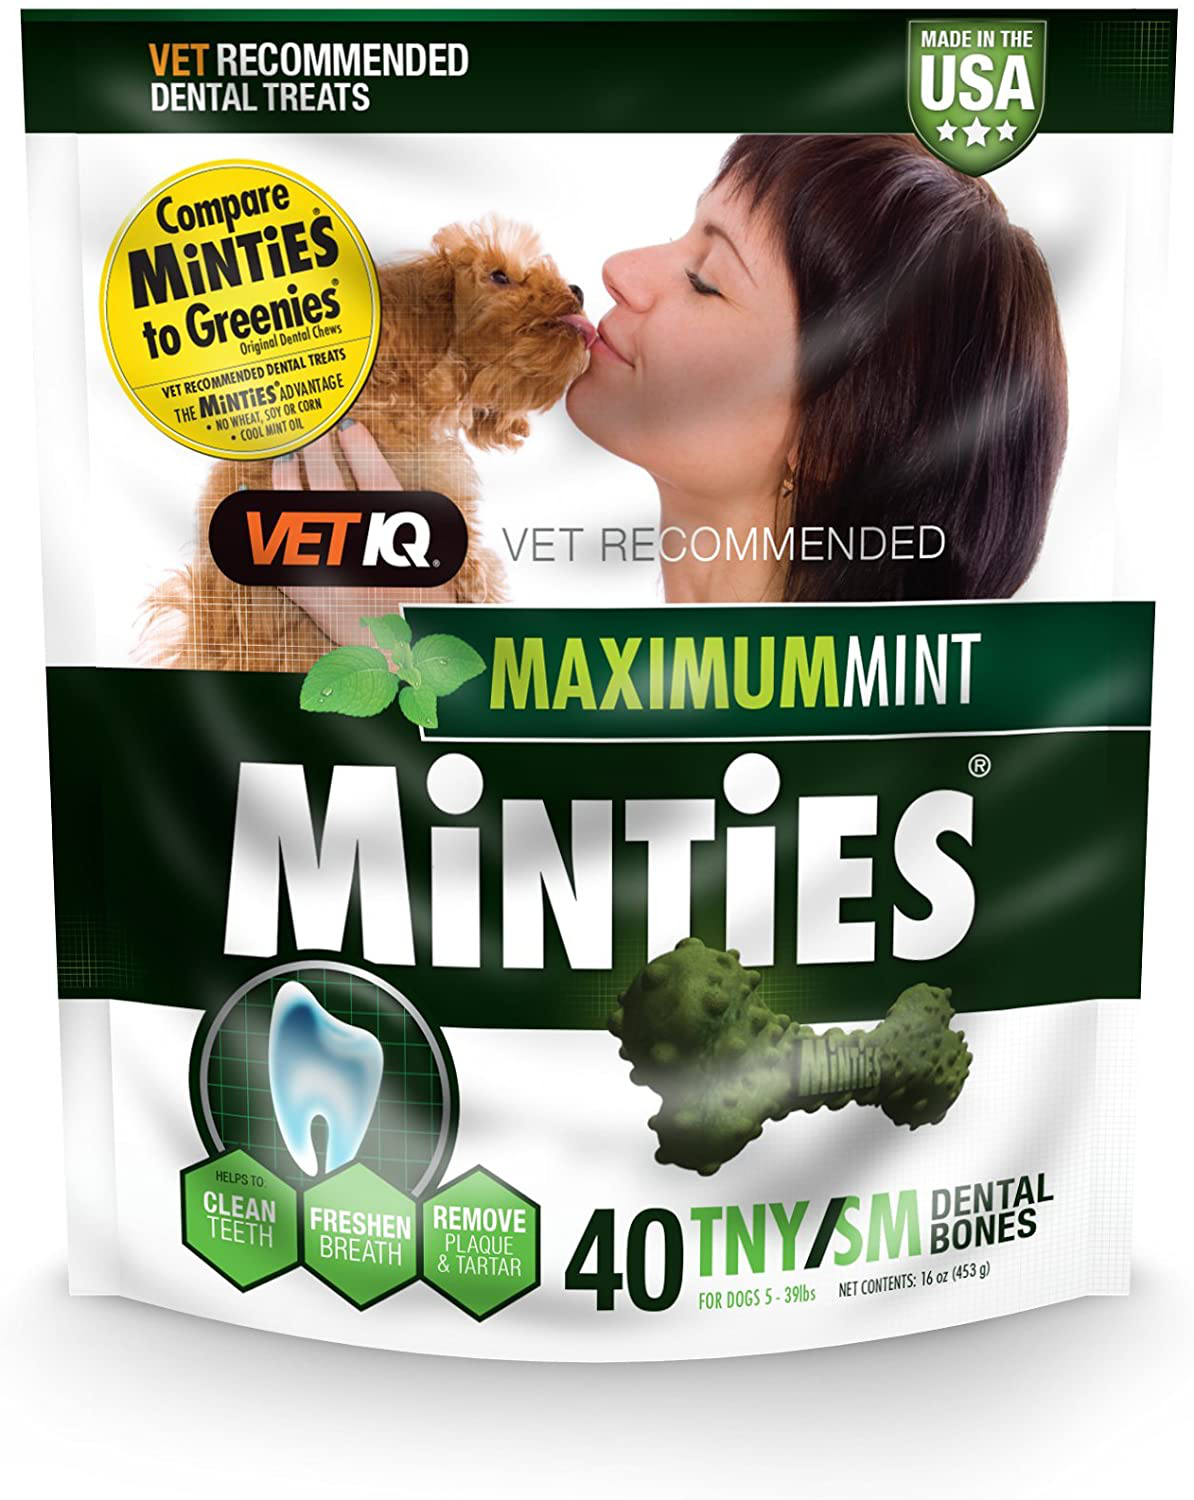 Minties Vetiq Dog Dental Bone Treats, Dental Chews for Dogs, (Perfect for Tiny/Small Dogs under 40 Lbs) Animals & Pet Supplies > Pet Supplies > Dog Supplies > Dog Treats PetIQ 40 Count  